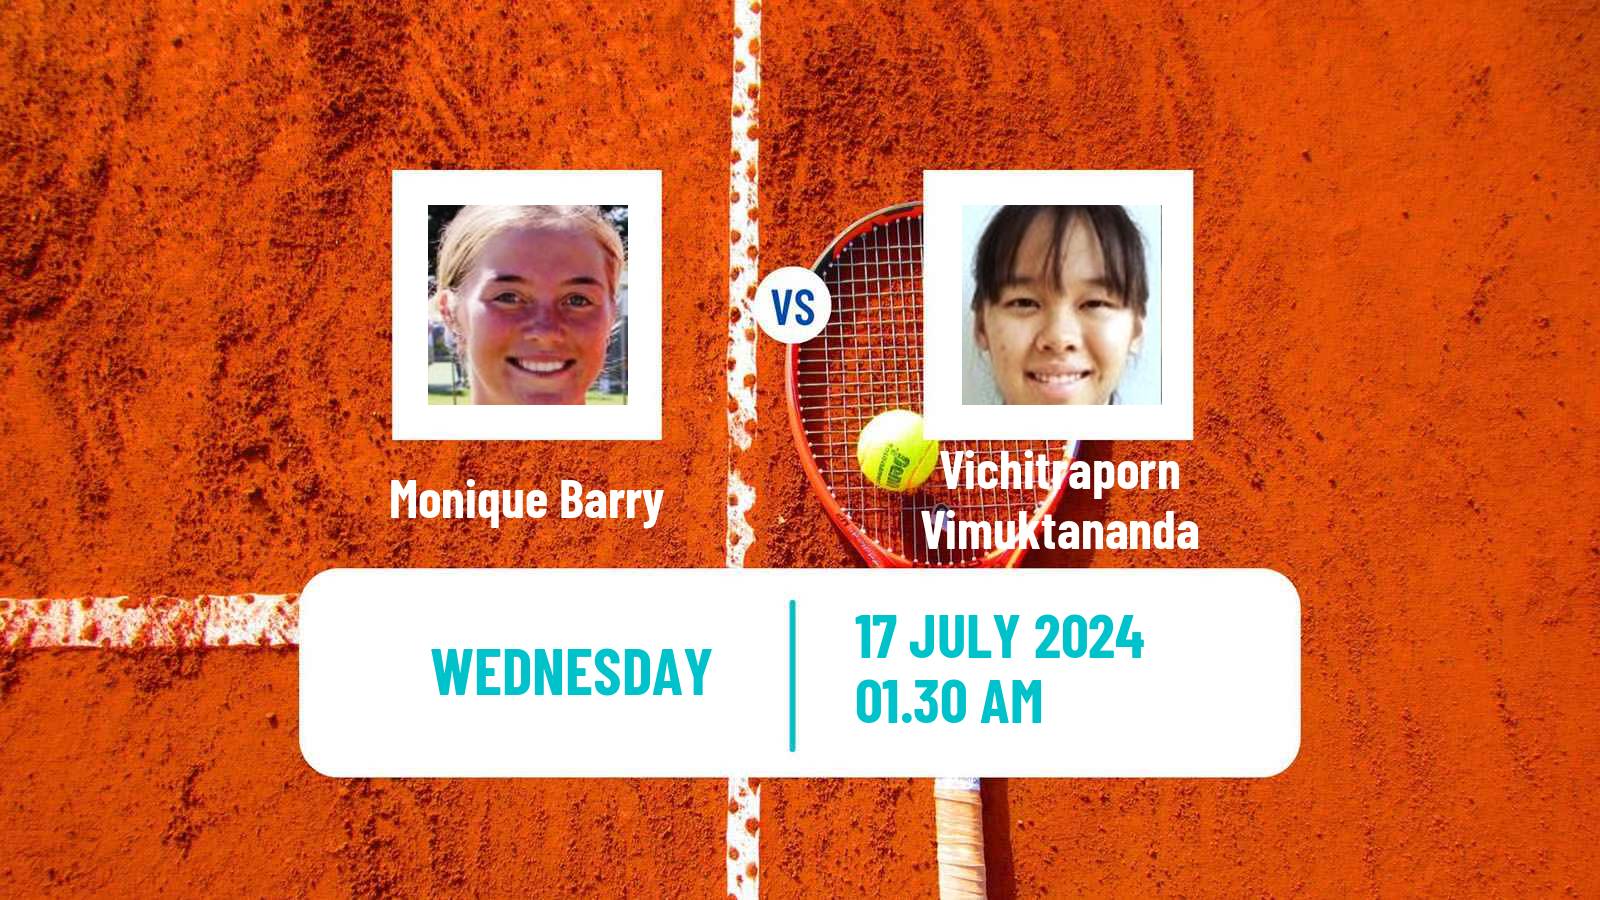 Tennis ITF W15 Nakhon Si Thammarat 4 Women Monique Barry - Vichitraporn Vimuktananda